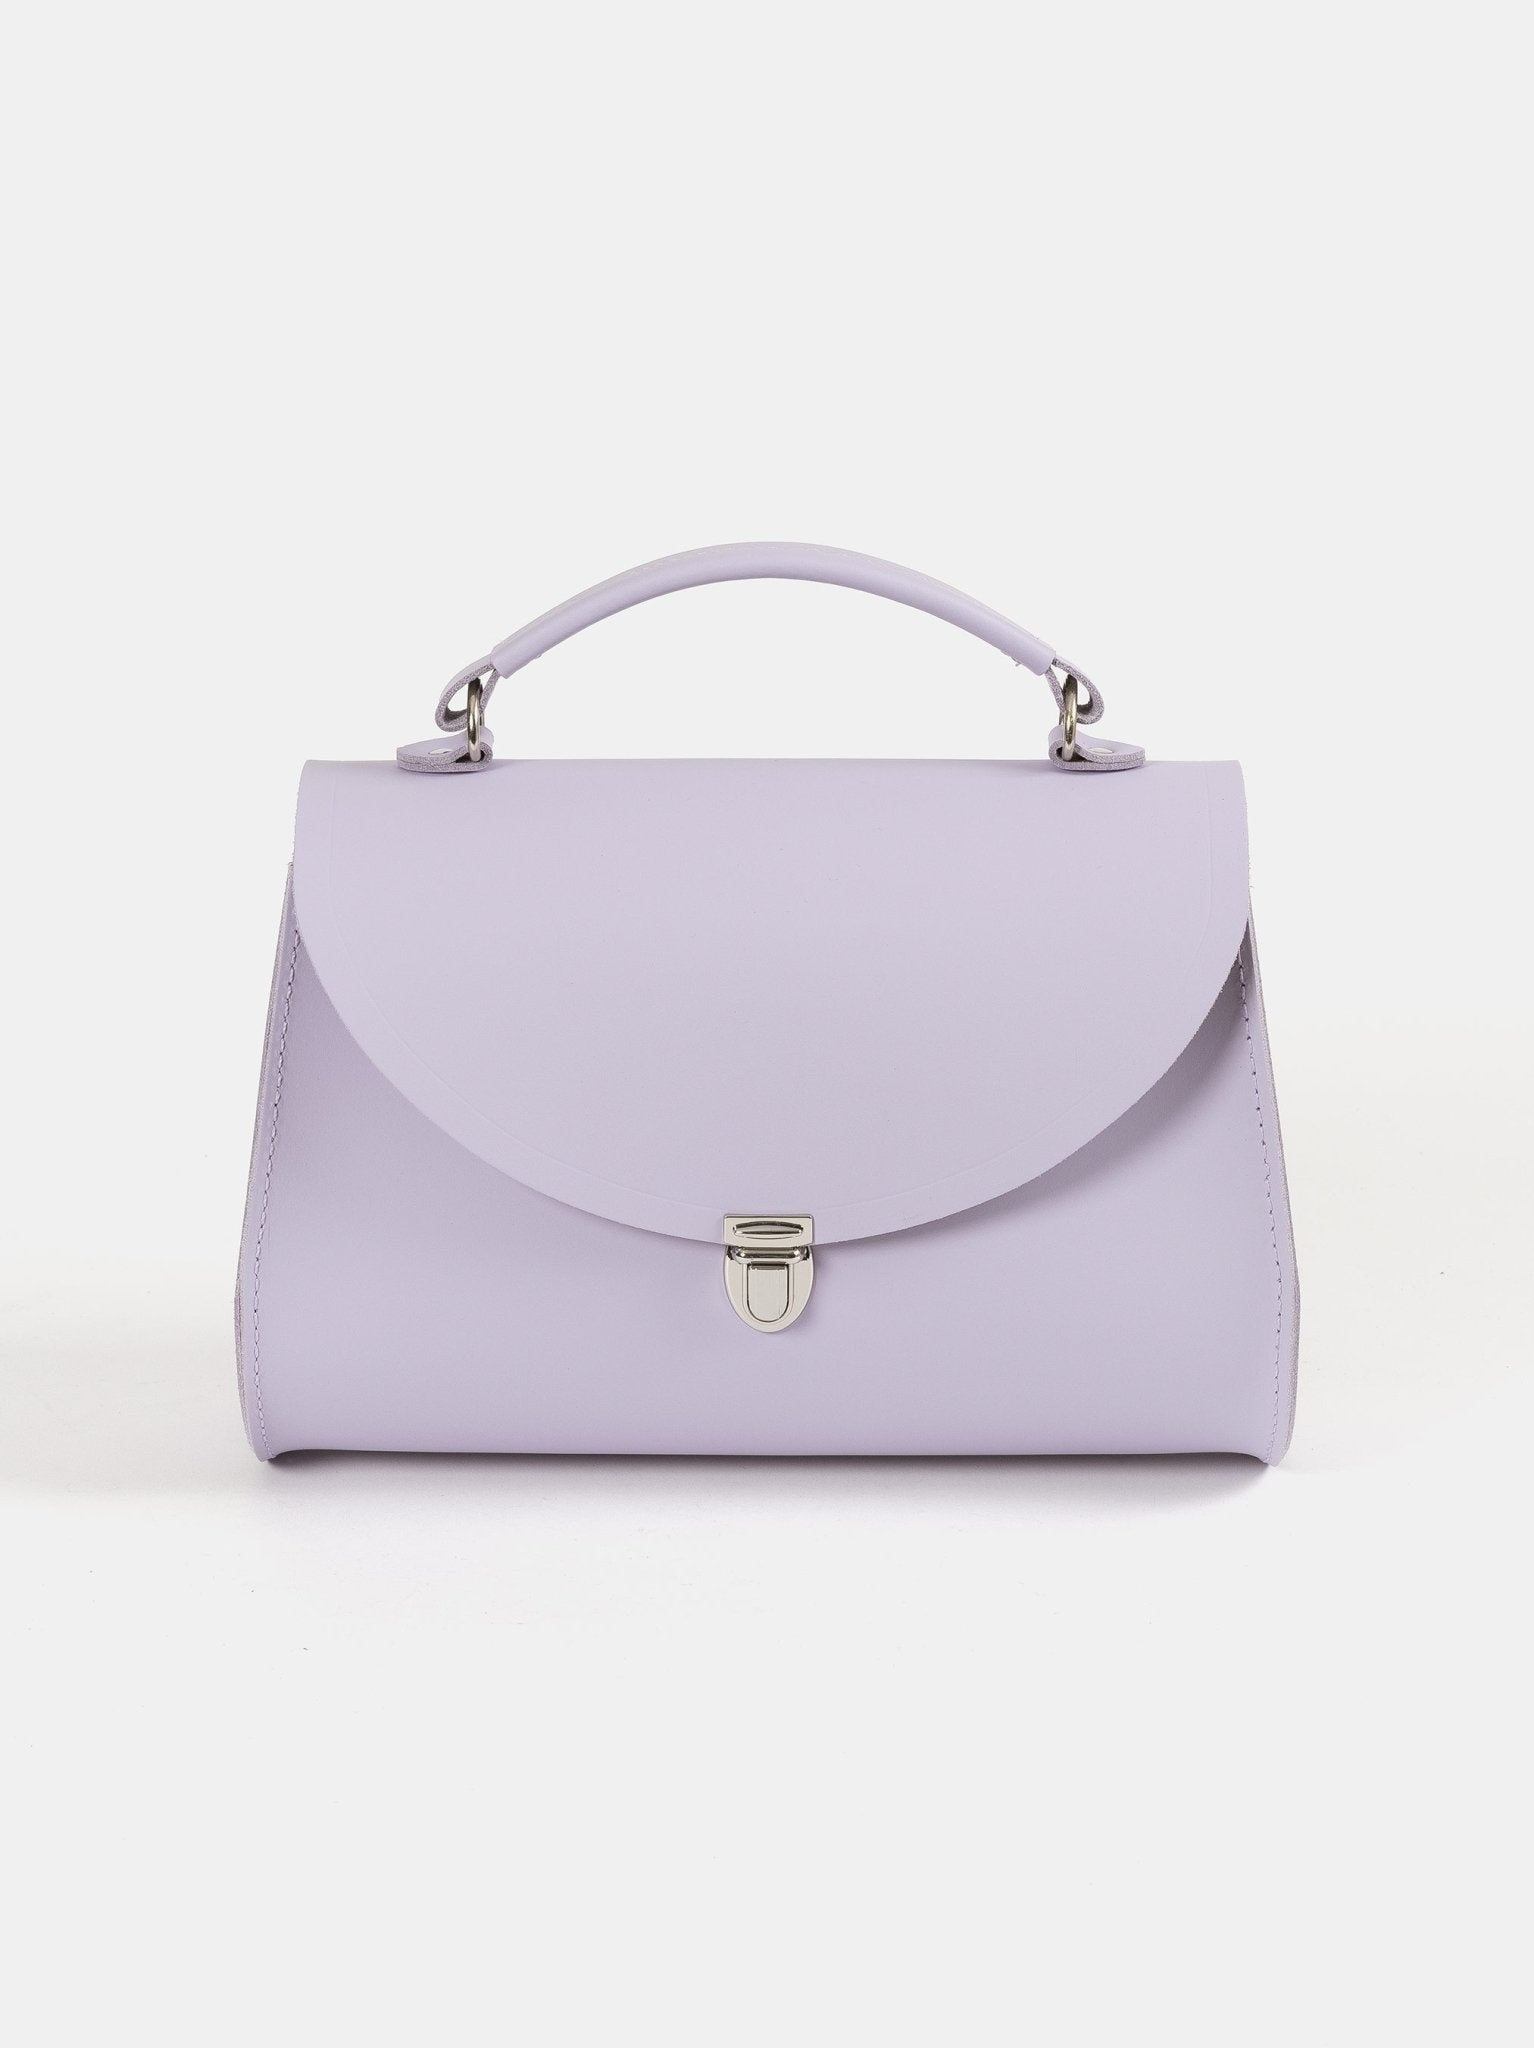 The Cambridge Satchel Co. Women's Lillac Handbag product